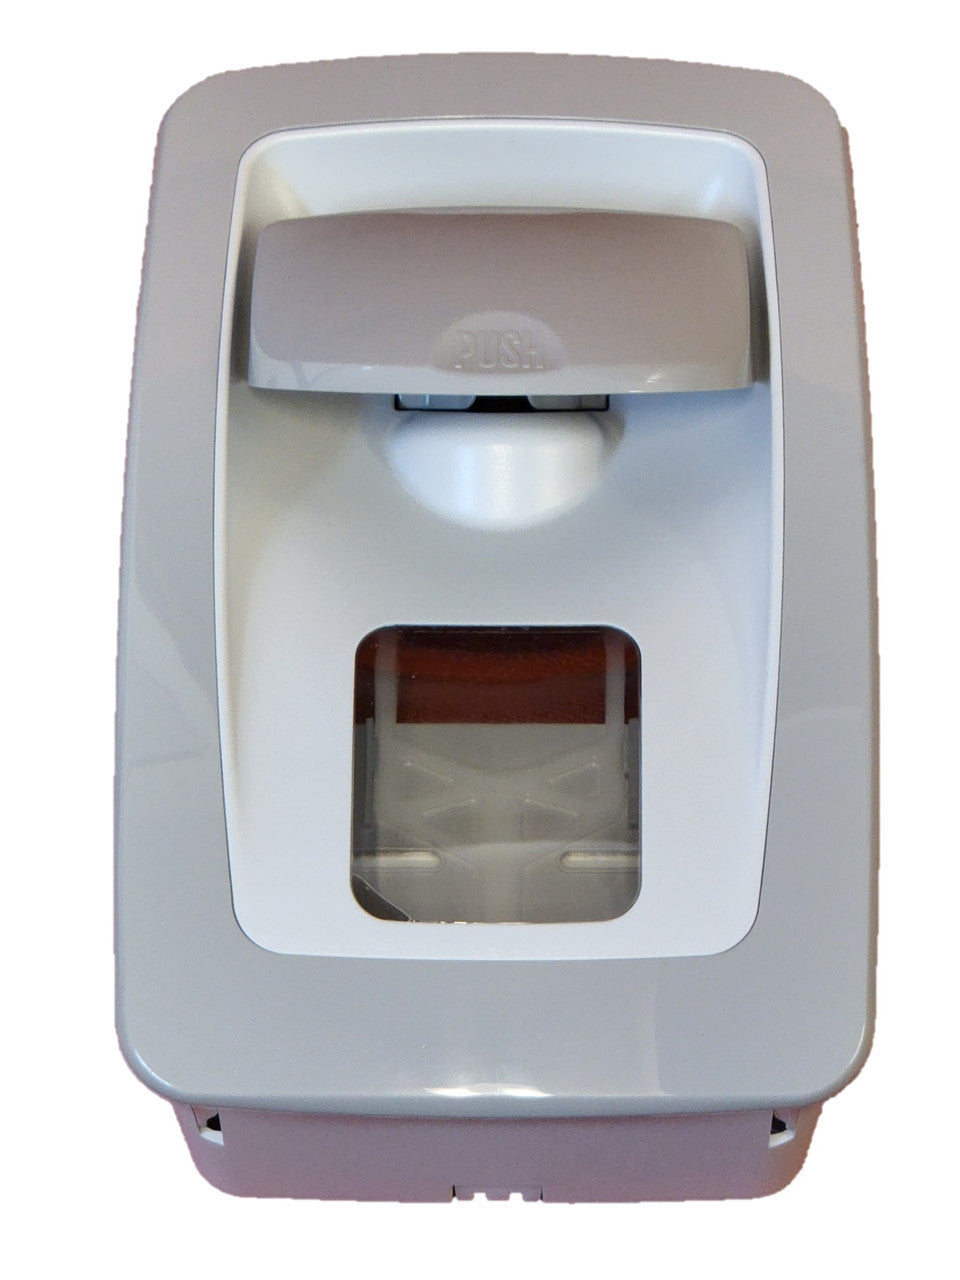 JaniSource Infinity Manual Foaming Soap Dispenser, 1000ml Capacity, Gray (1 Each) 